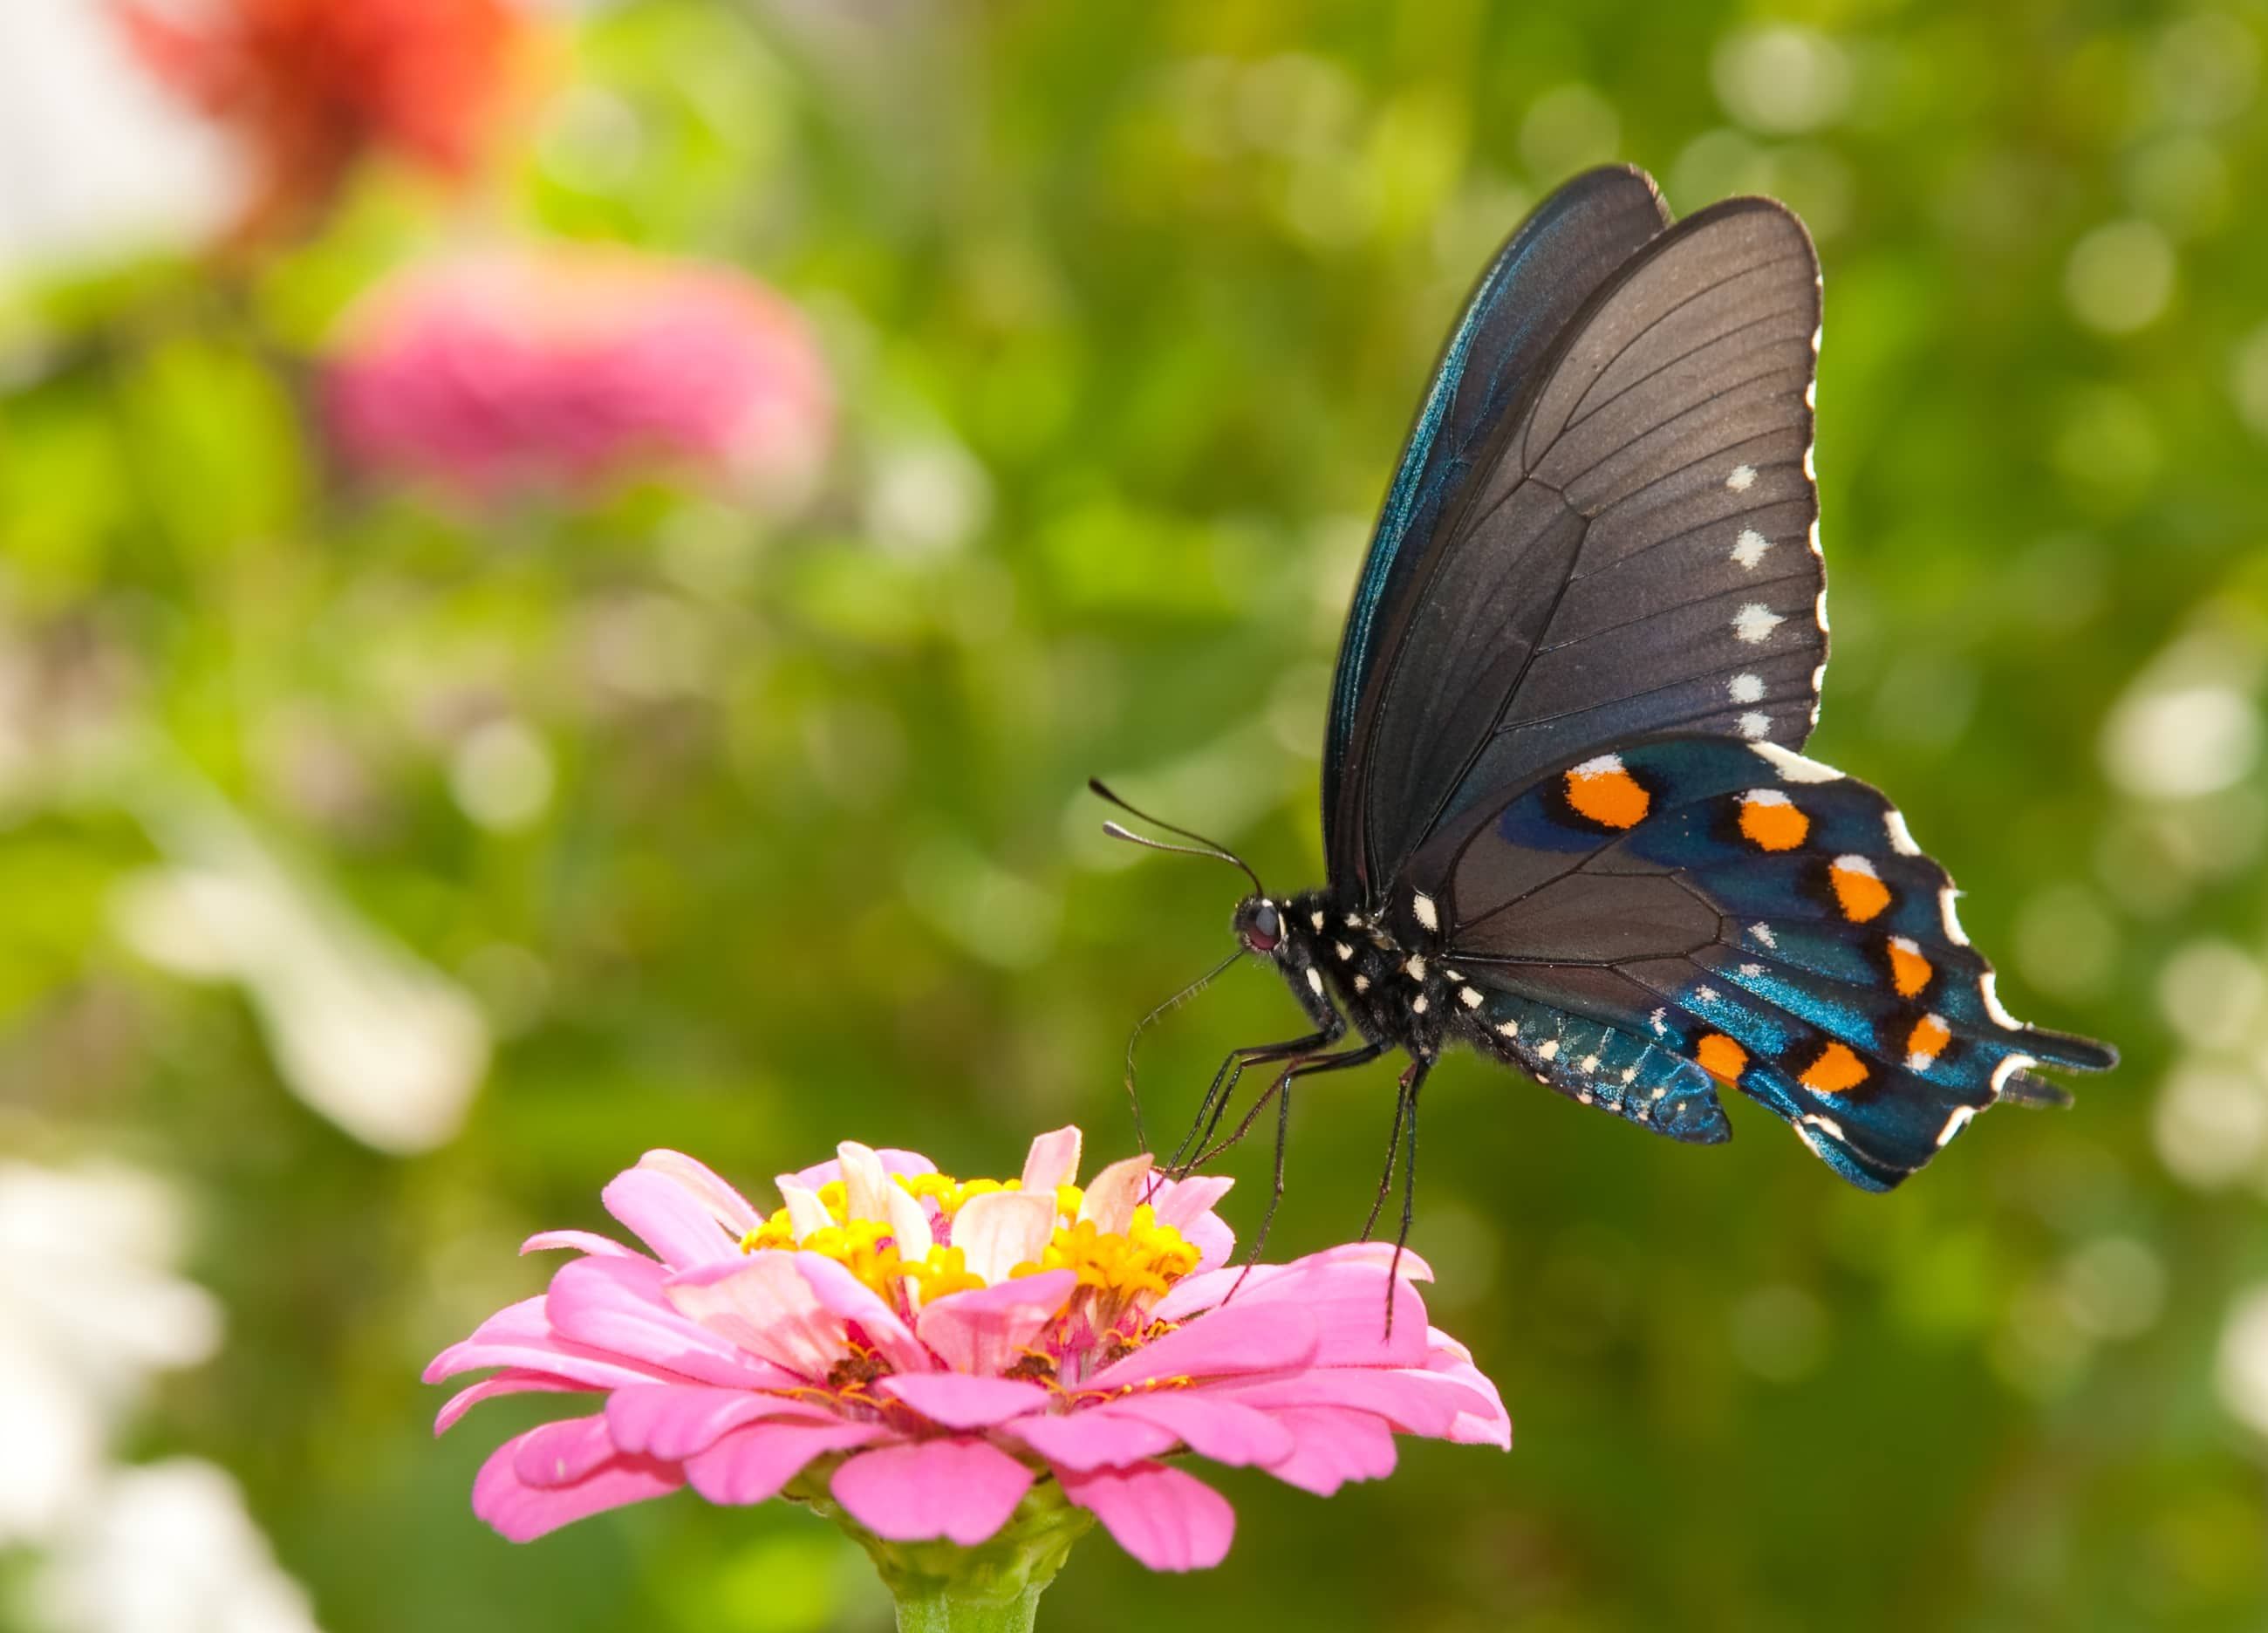 Green Swallowtail butterfly feeding on a pink Zinnia in sunny summer garden